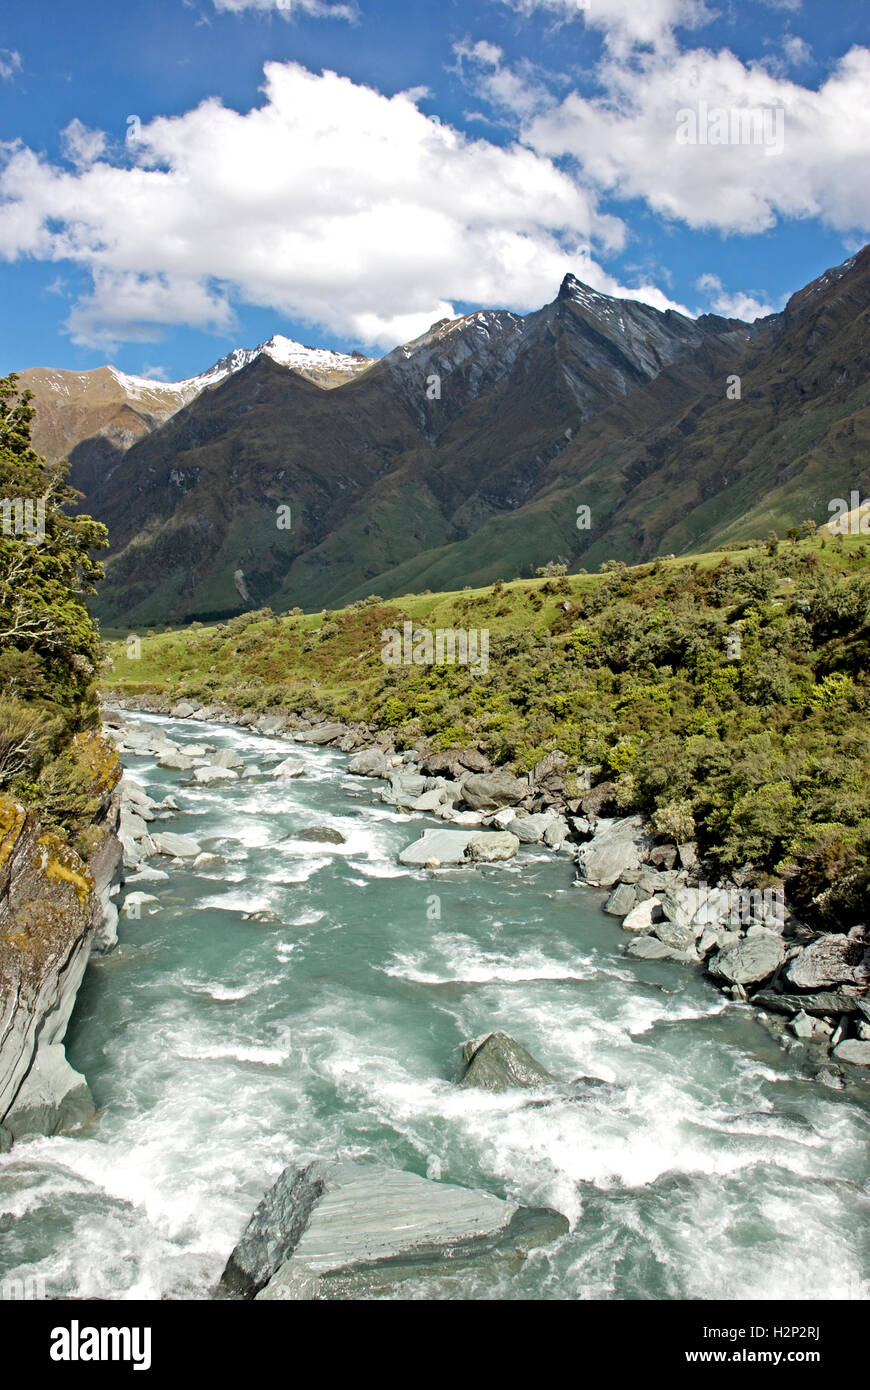 The Matukituki River, Mount Aspiring National Park, Otago, New Zealand. Stock Photo